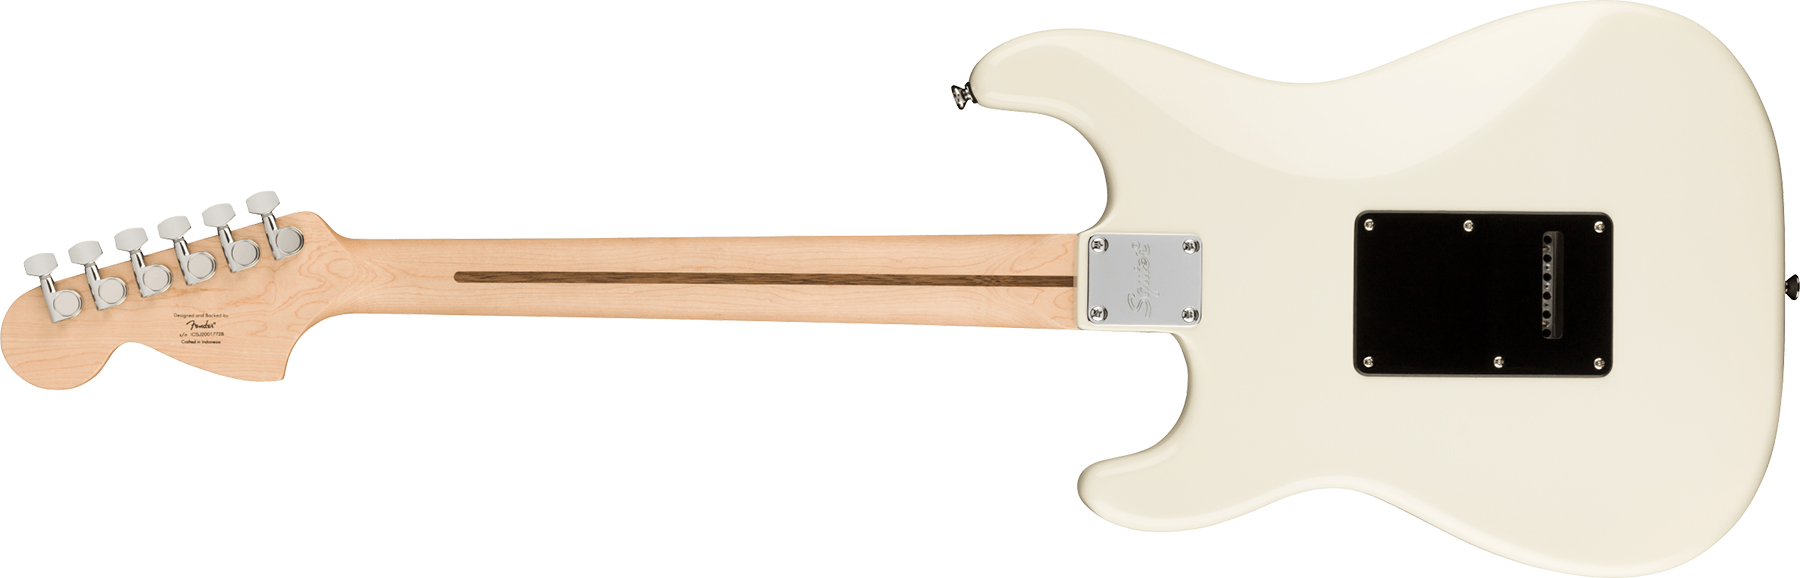 Squier Strat Affinity 2021 Hh Trem Lau - Olympic White - Guitarra eléctrica con forma de str. - Variation 1